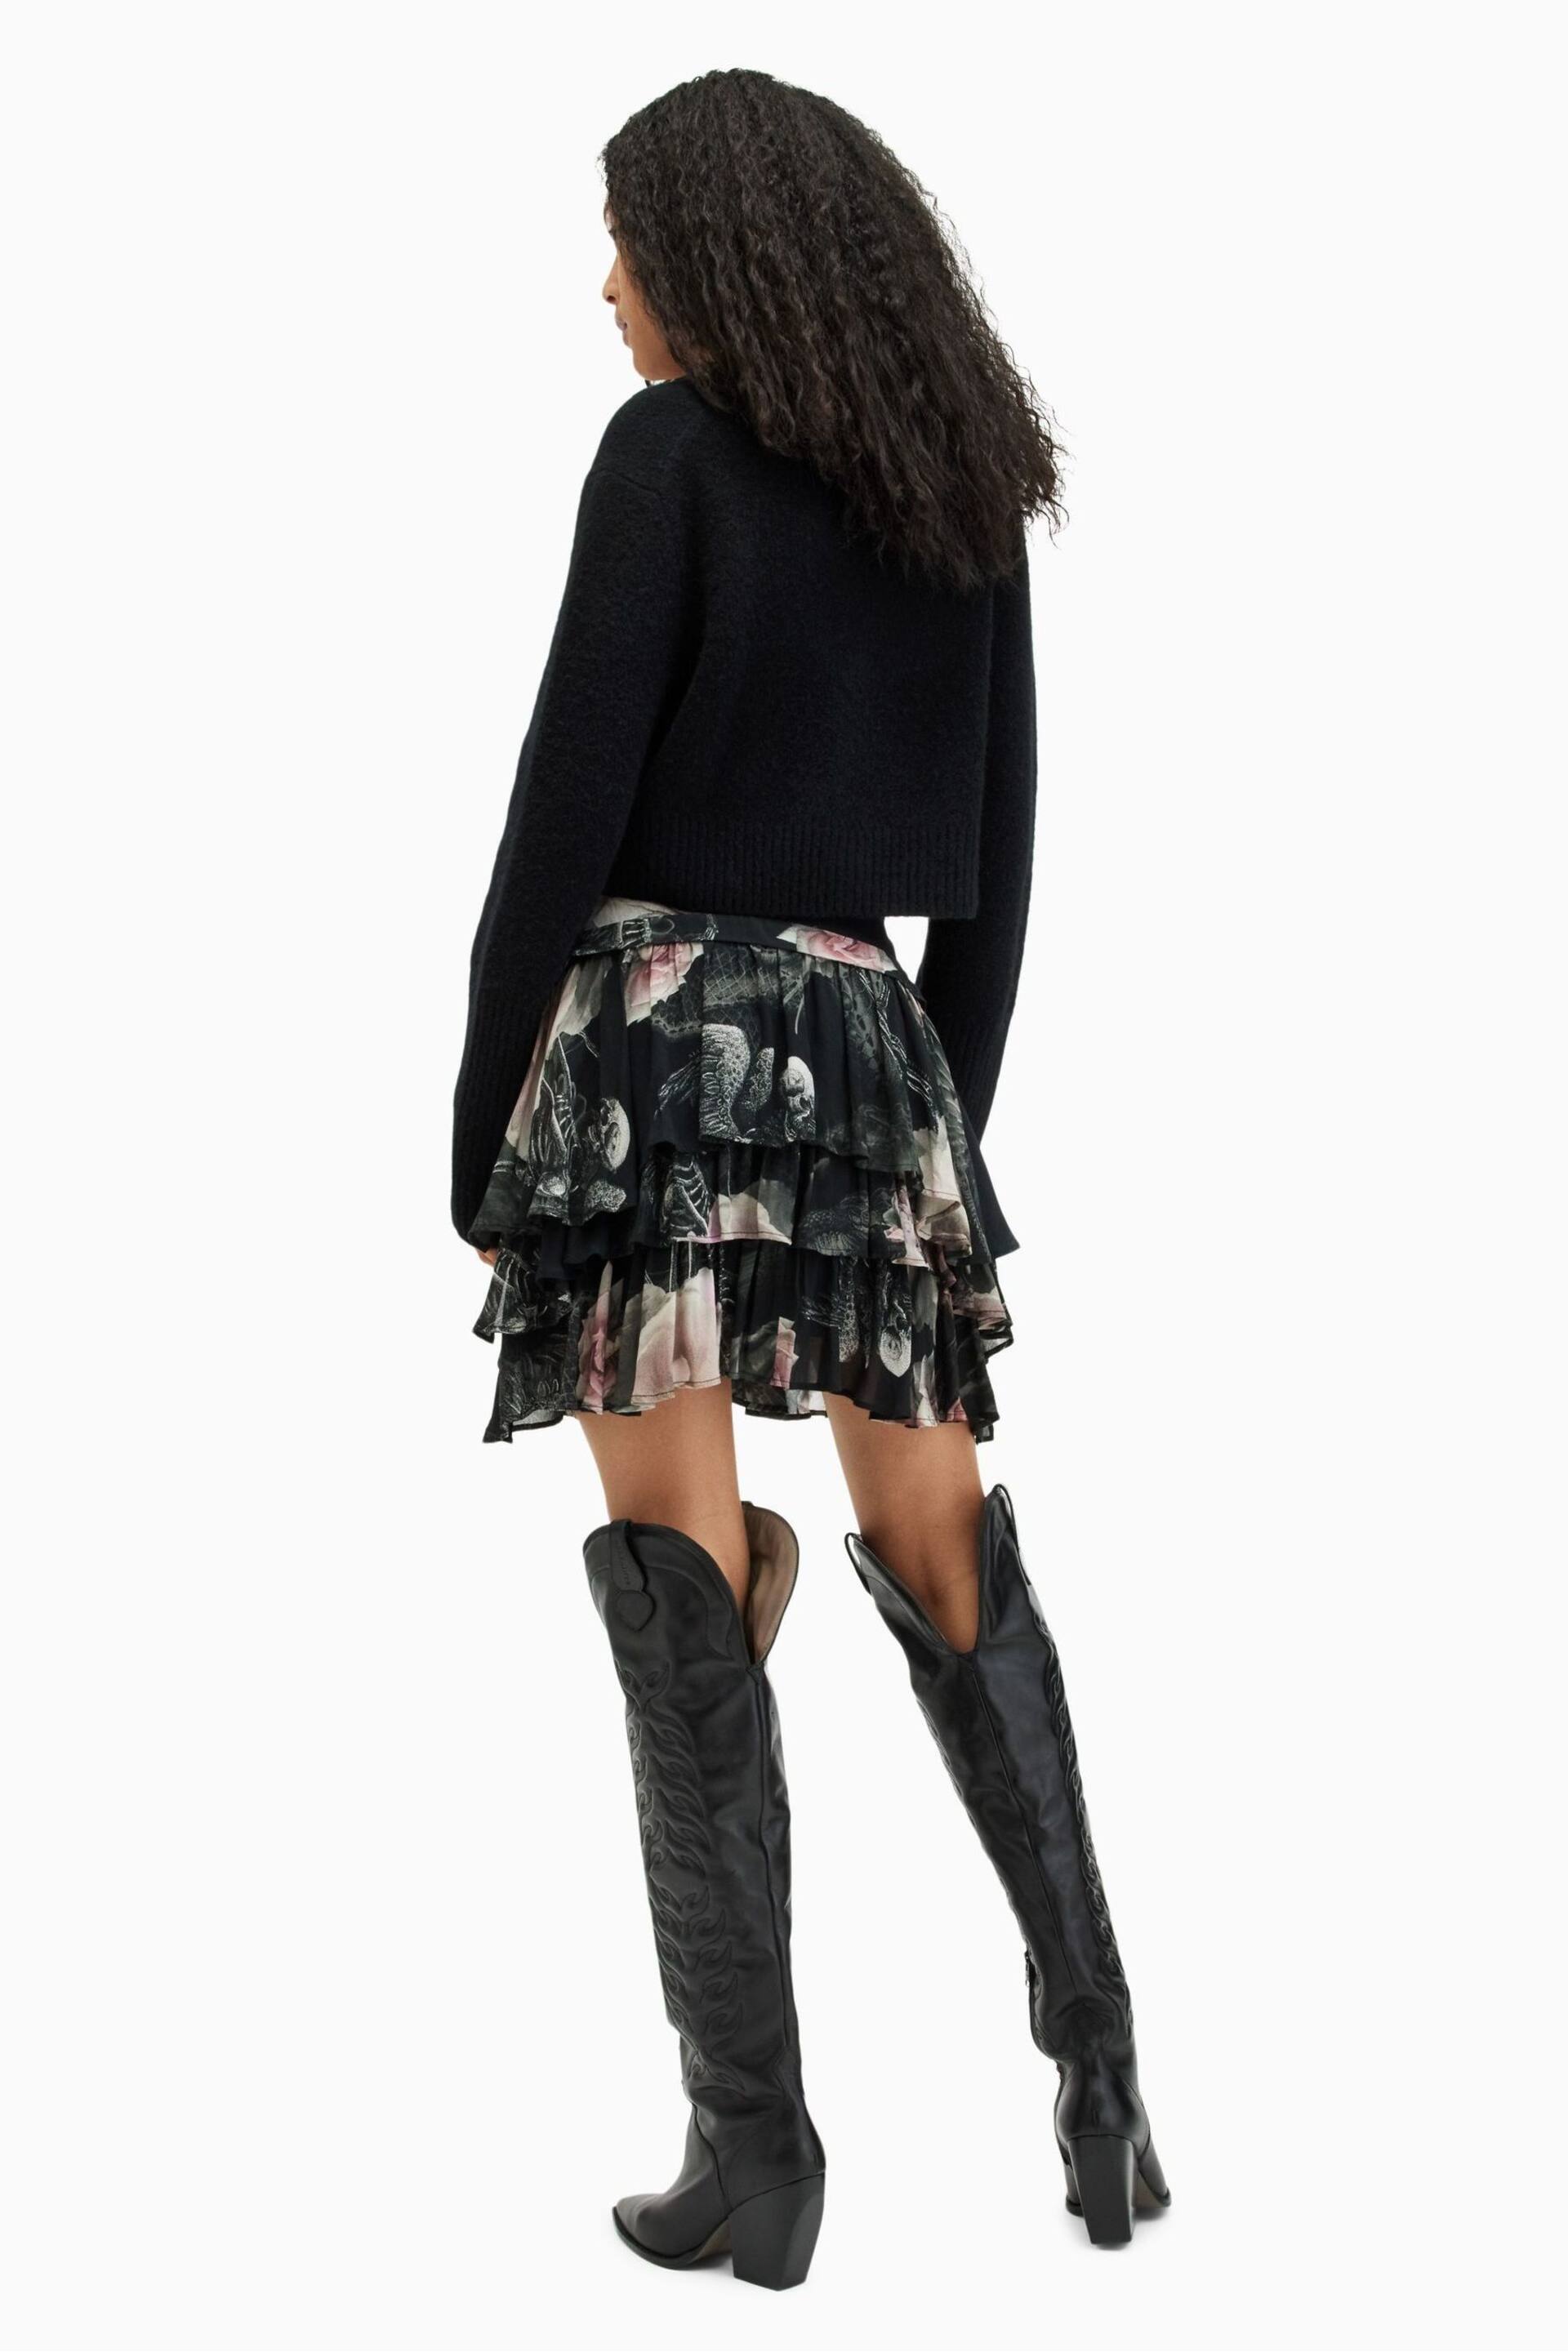 AllSaints Black Cavarly Valley Skirt - Image 5 of 6